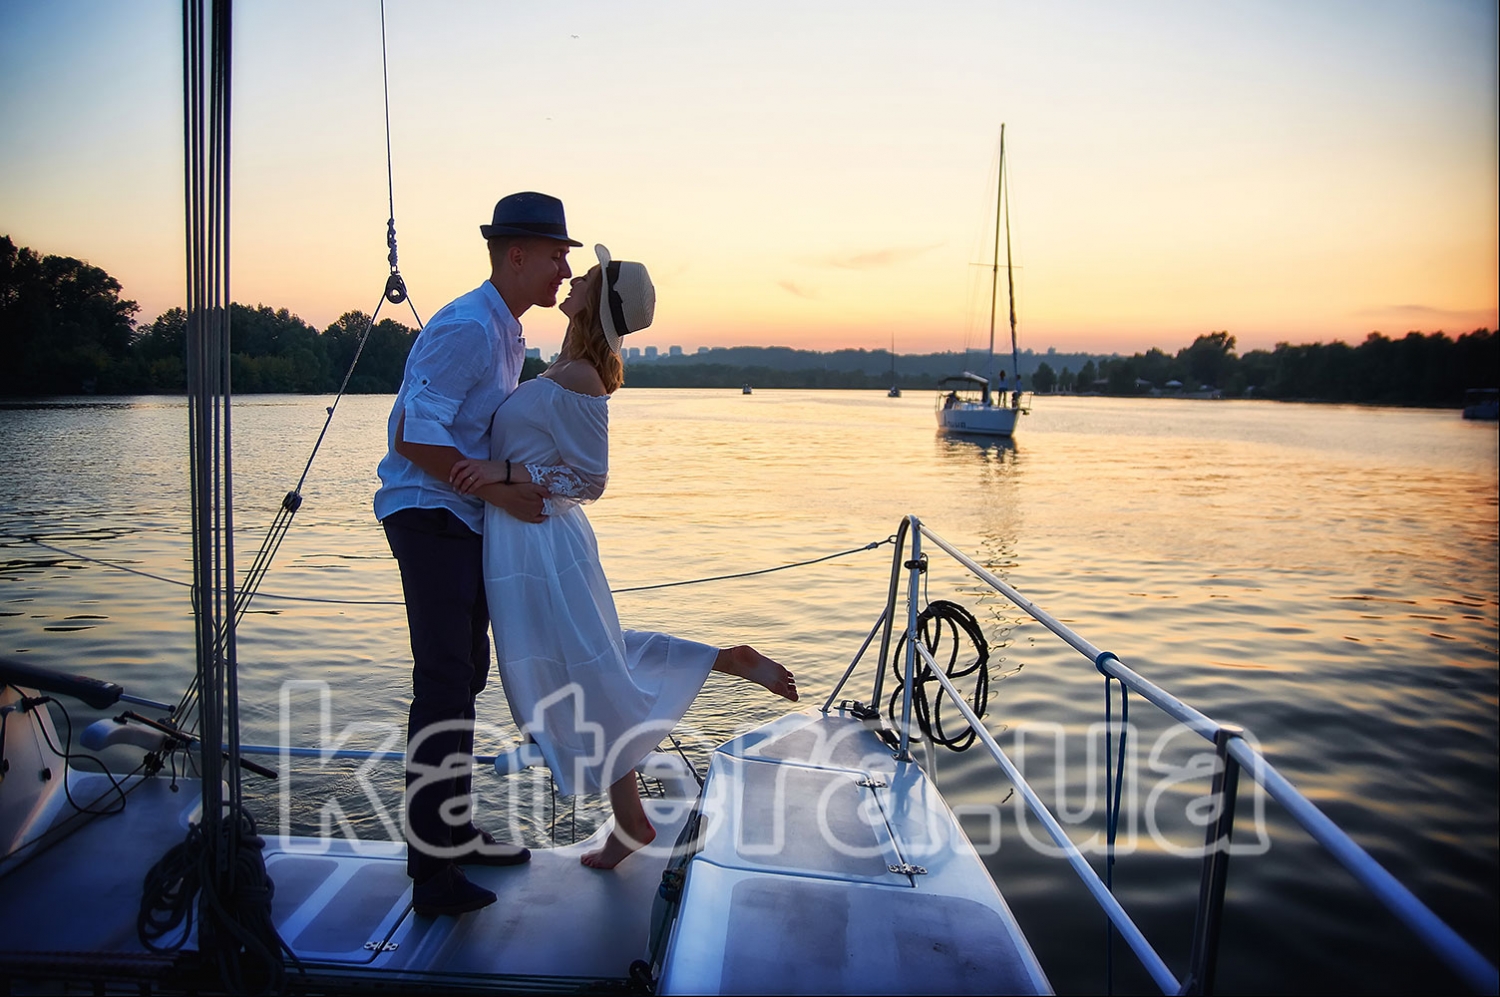 Парень и девушка обнимаются на фоне заката солнца — трогательно и романтично - katera.ua